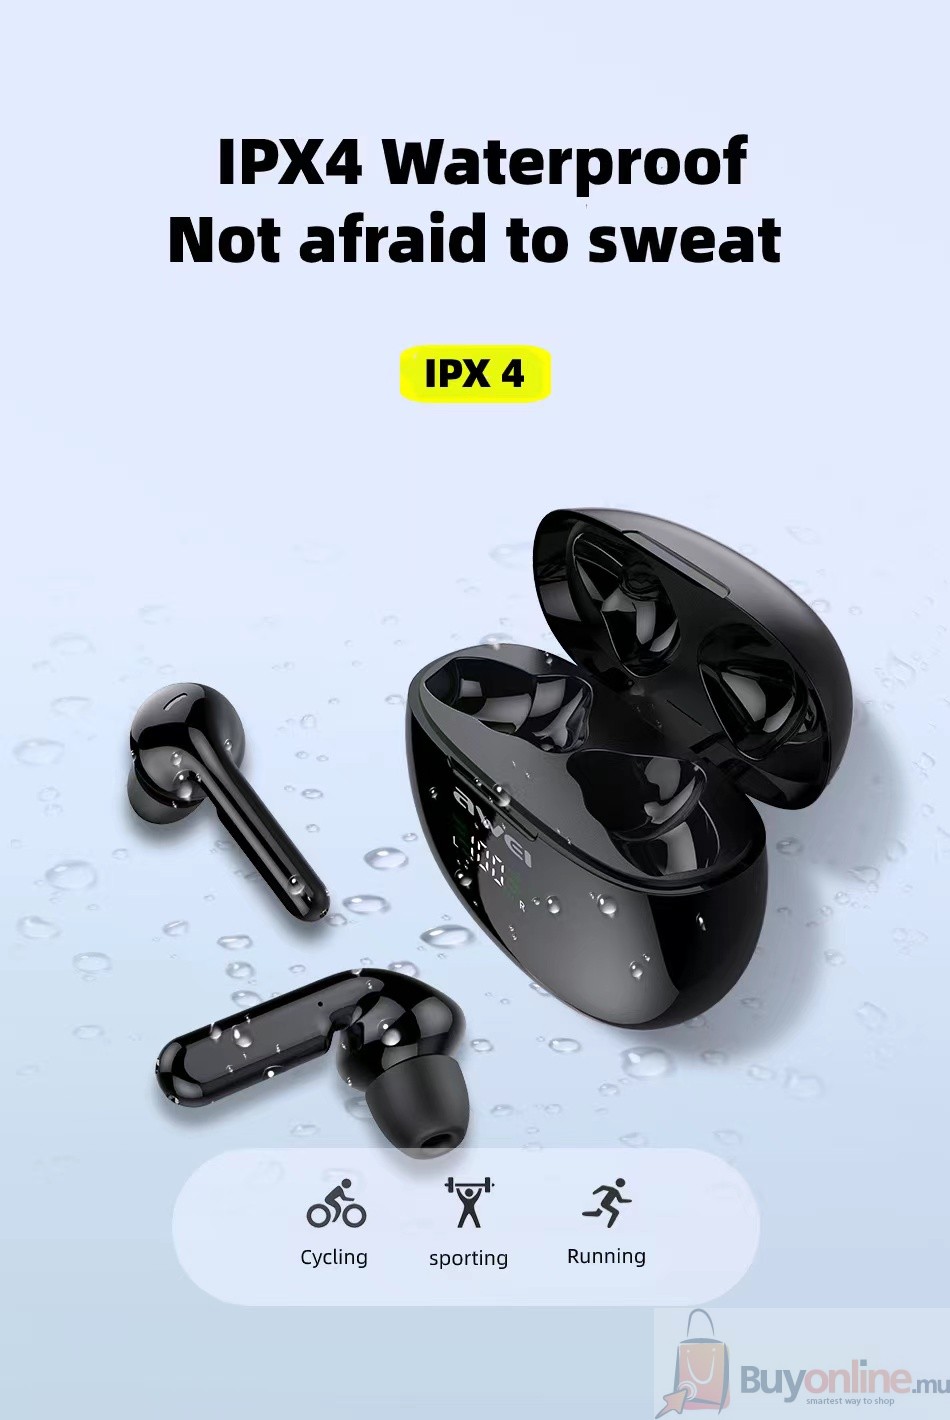 image 2022 06 11 232846025 - Awei TA8 wireless earphones earbuds Bluetooth earphone headset With Microphones charging case Waterproof gamer sport buds - BuyOnline.mu - AWEI TA,Earbuds